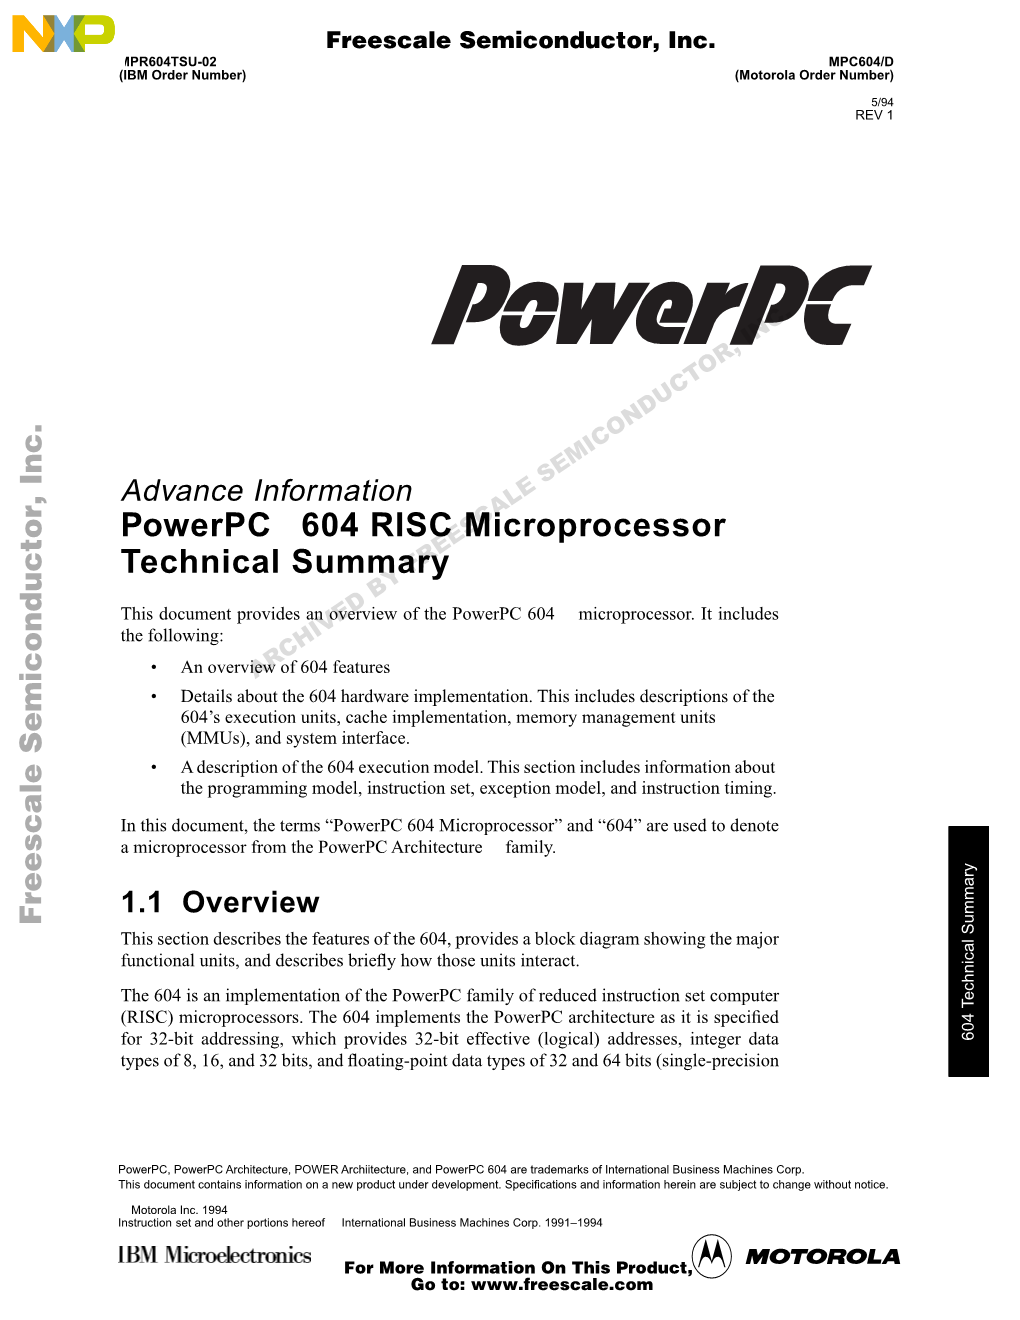 Powerpc™ 604 RISC Microprocessor Technical Summary